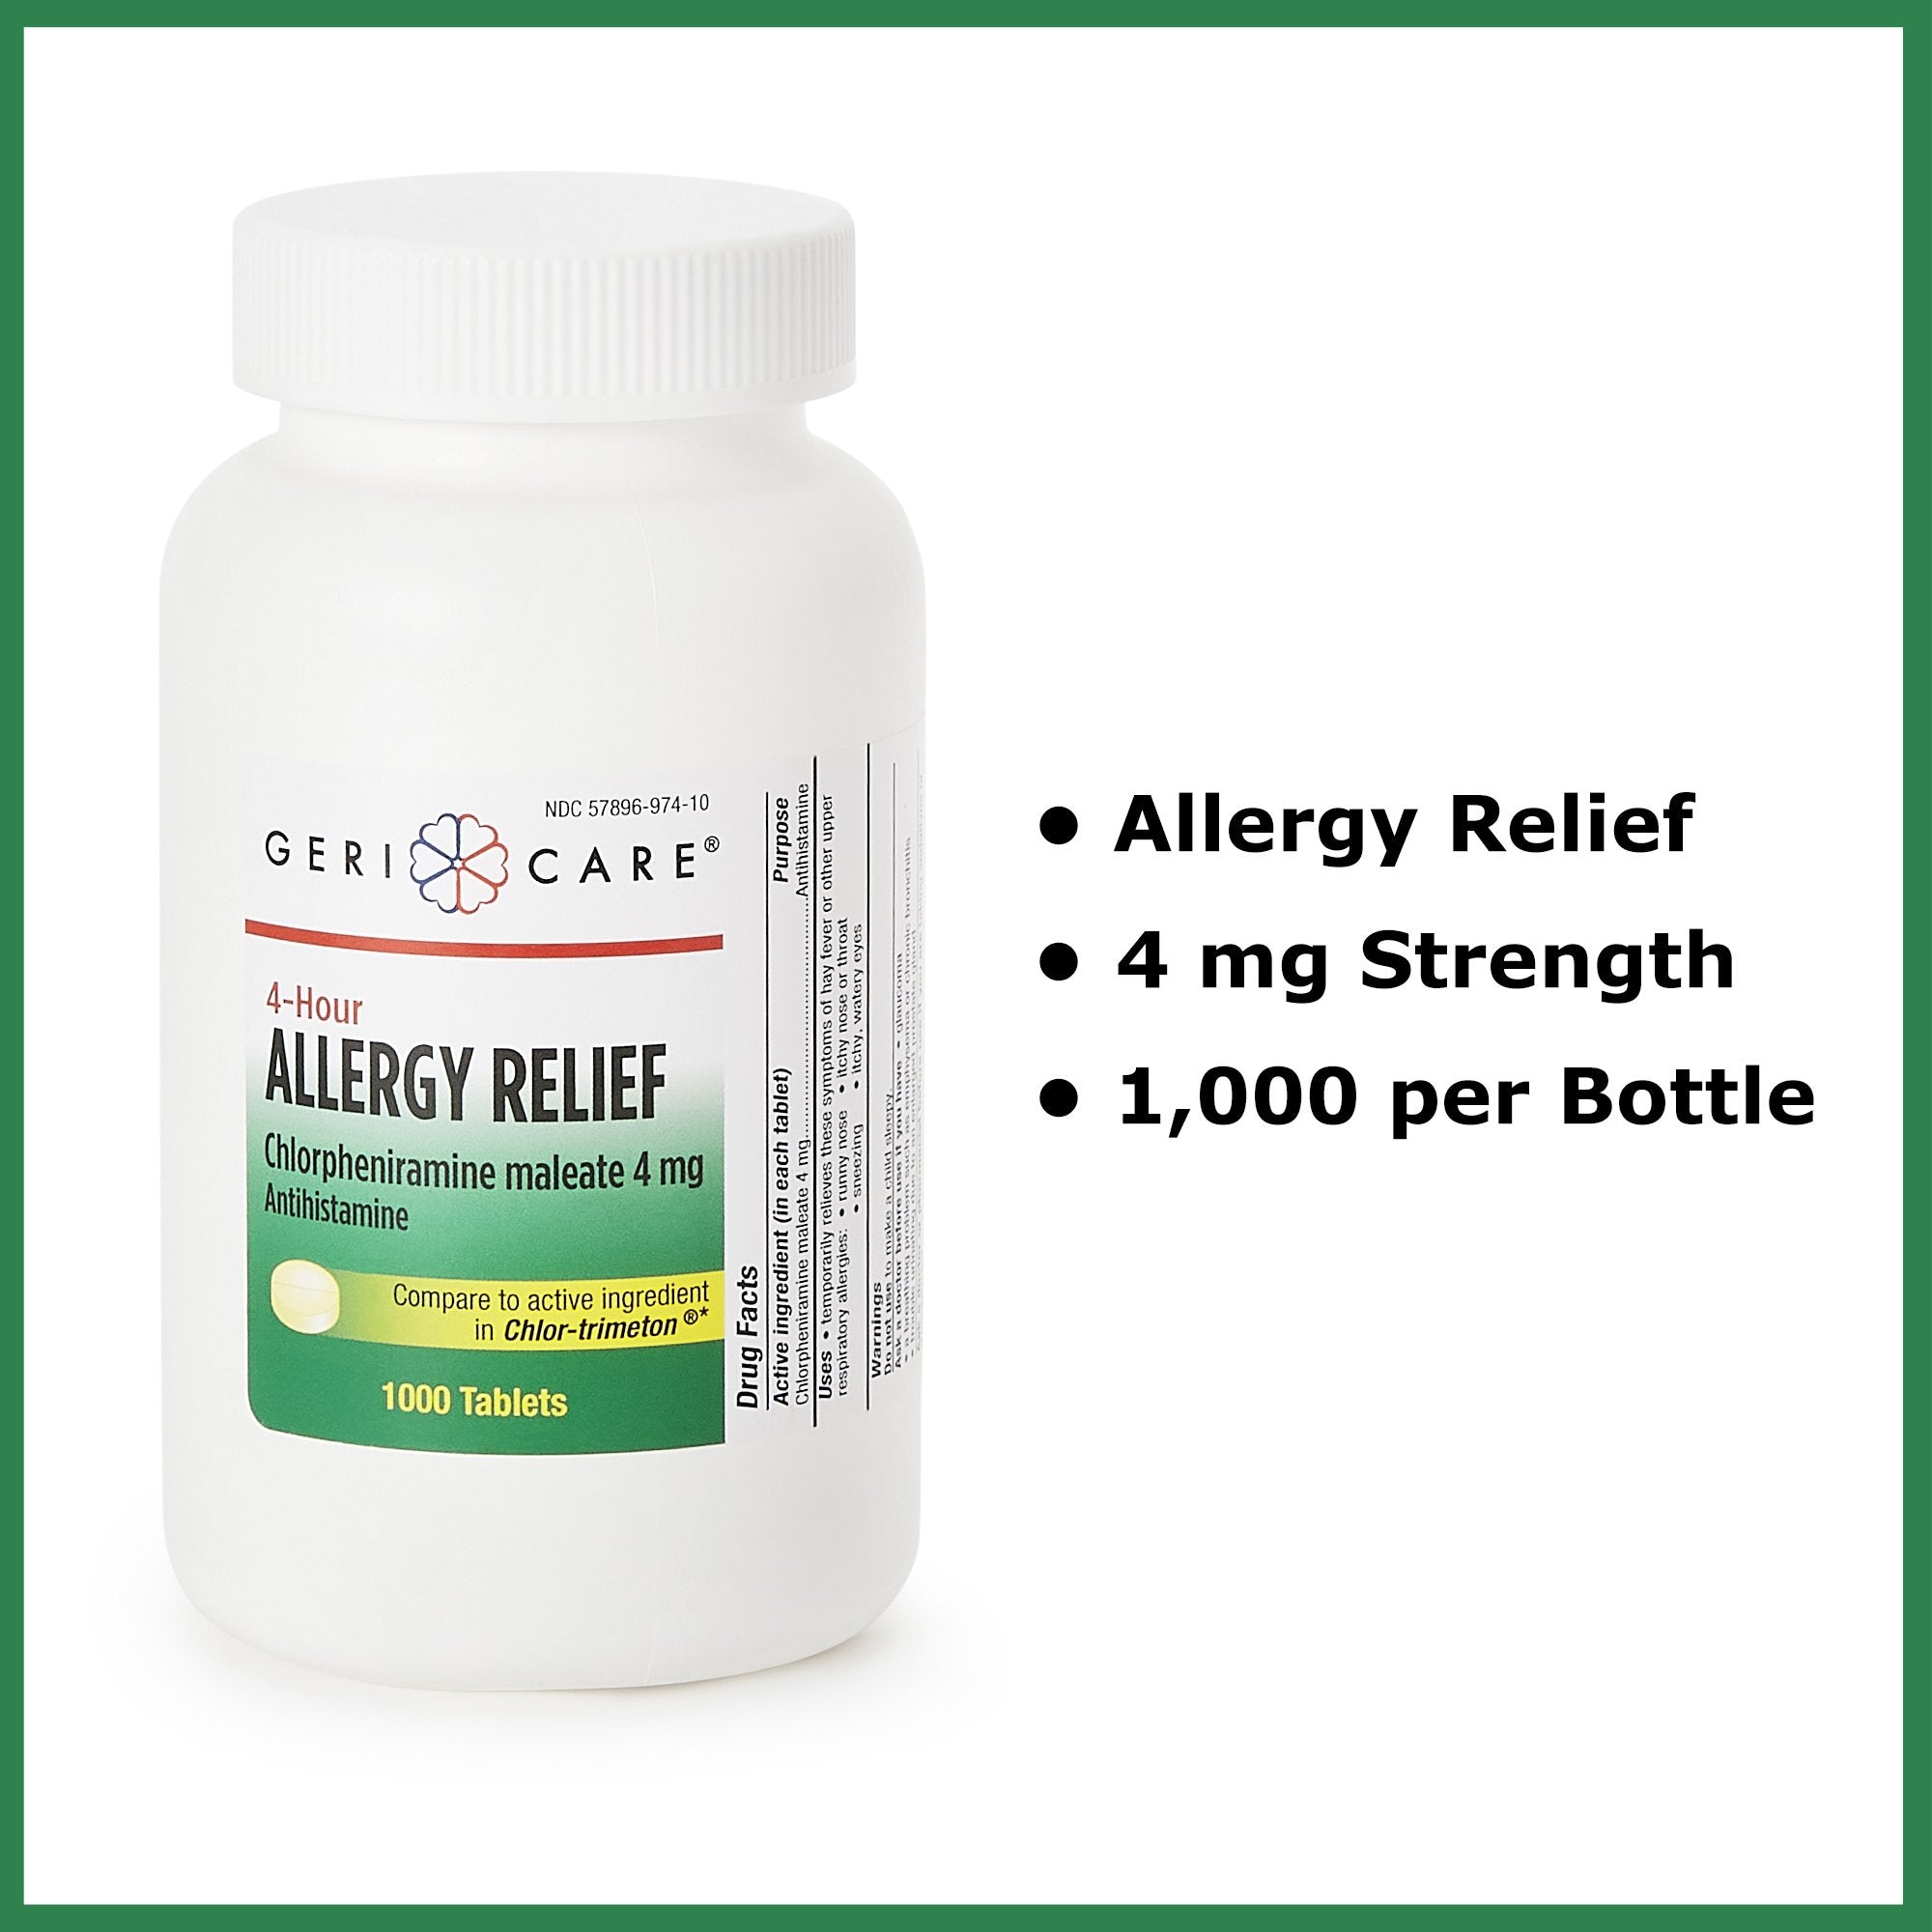 Allergy Relief Health*Star® 4 mg Strength Tablet 1,000 per Bottle